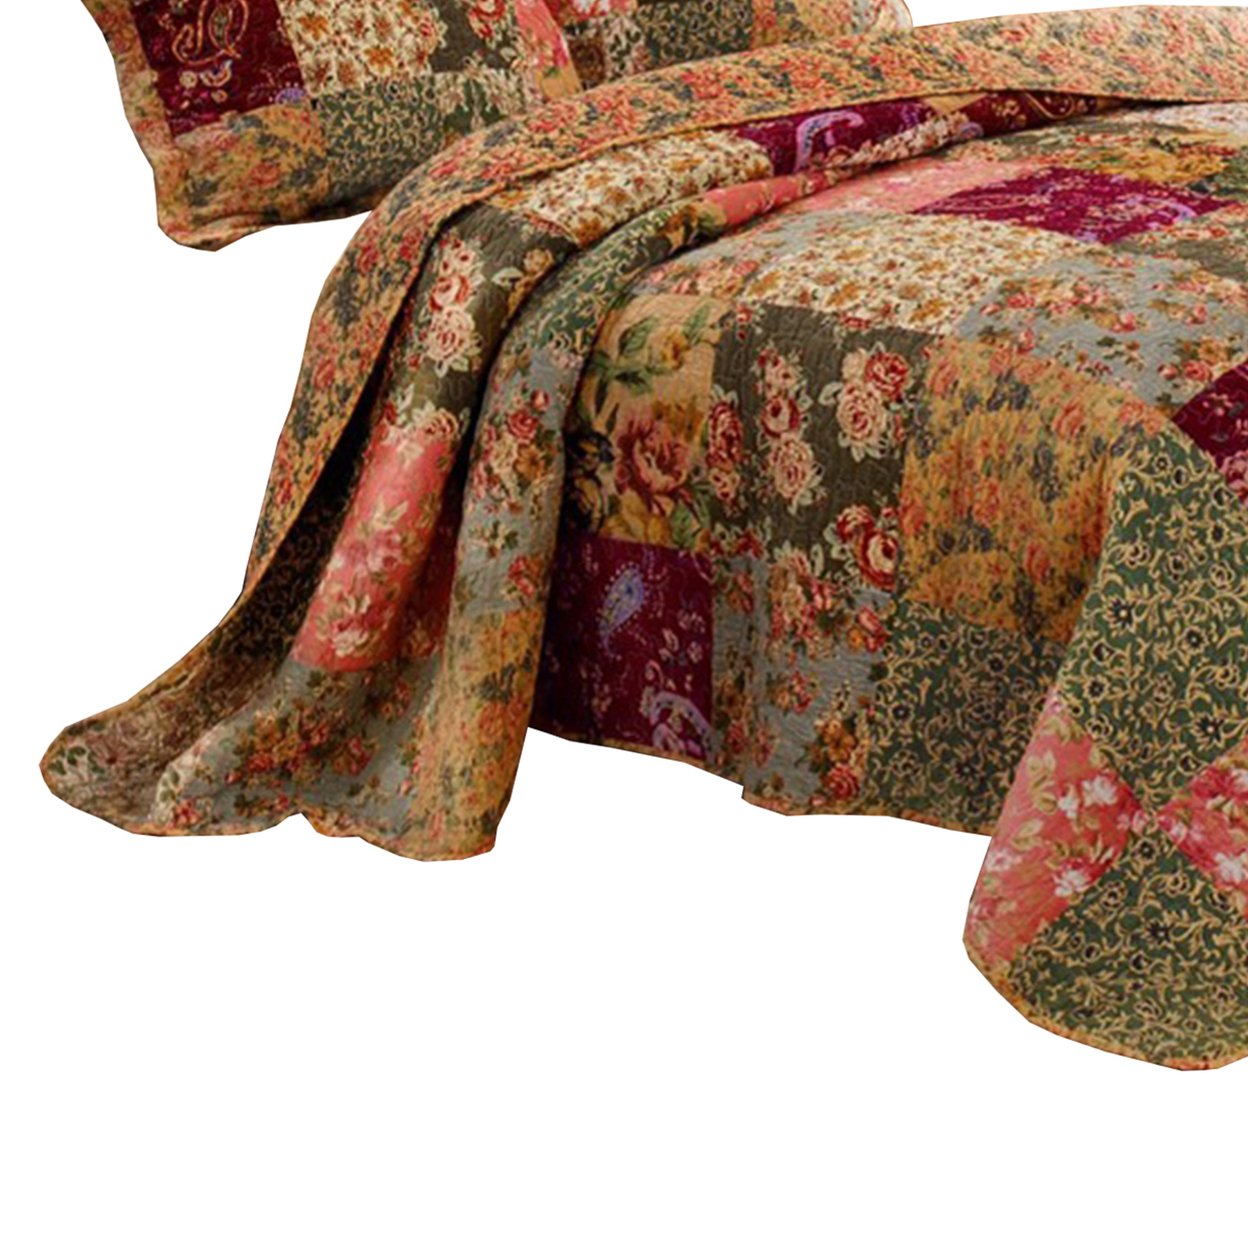 Kamet 3 Piece Fabric Queen Size Bedspread Set With Floral Prints,Multicolor- Saltoro Sherpi